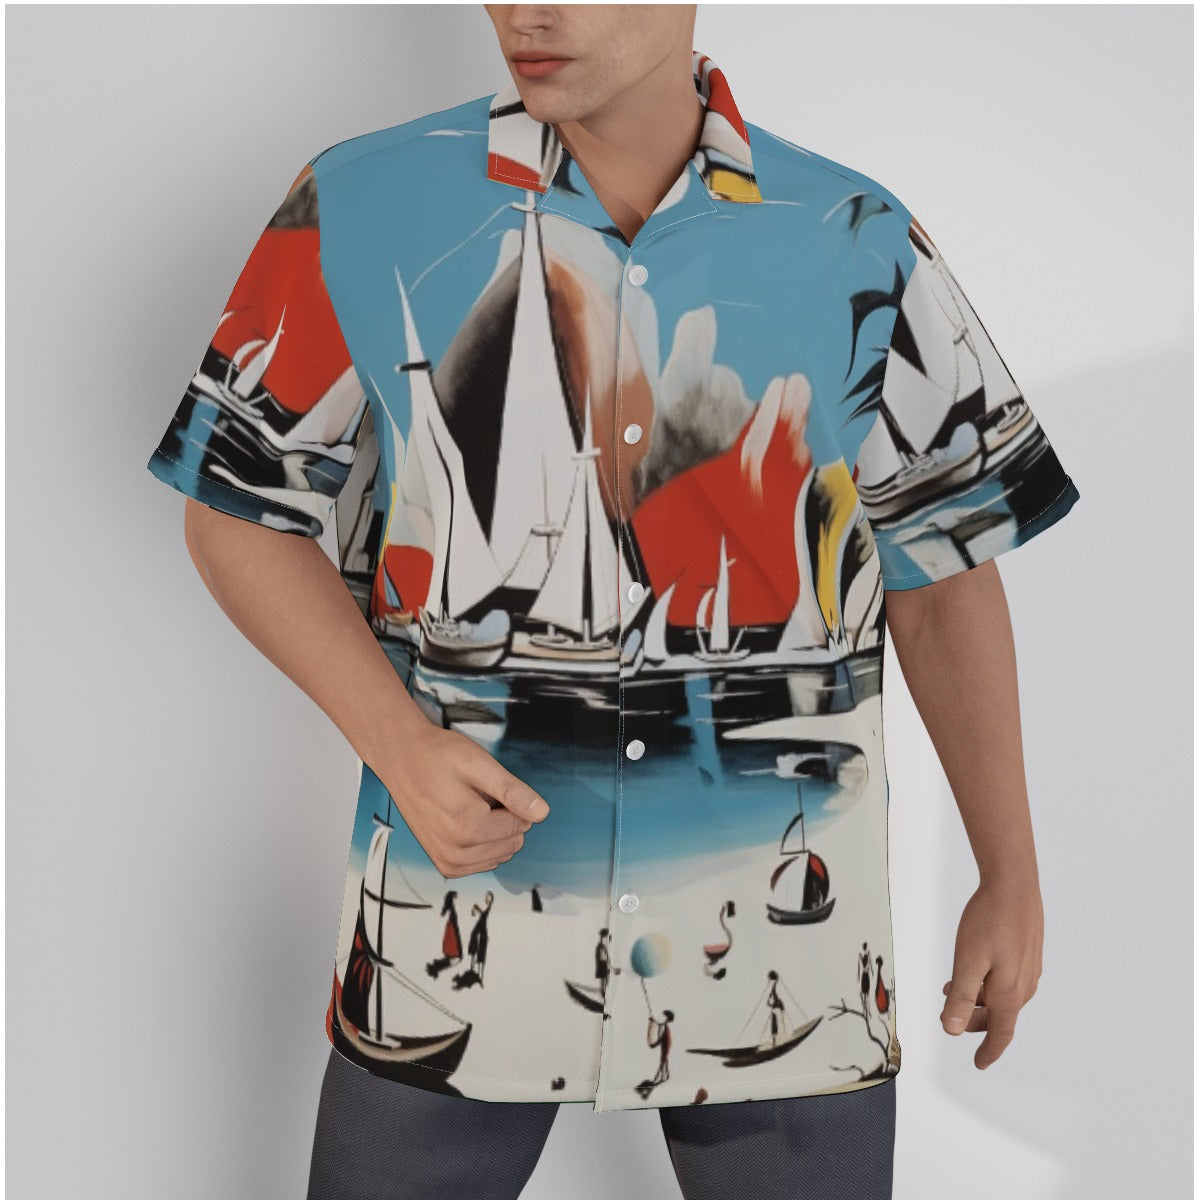 Men's Sailing Boat Shirt